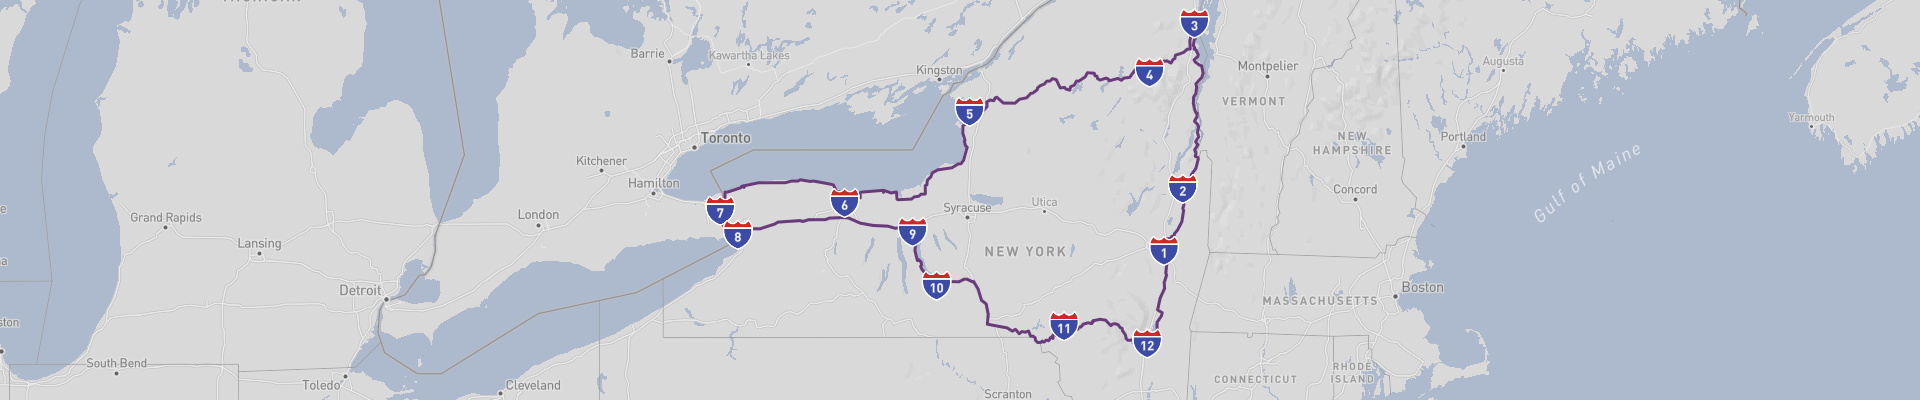 Itinéraire New York State 